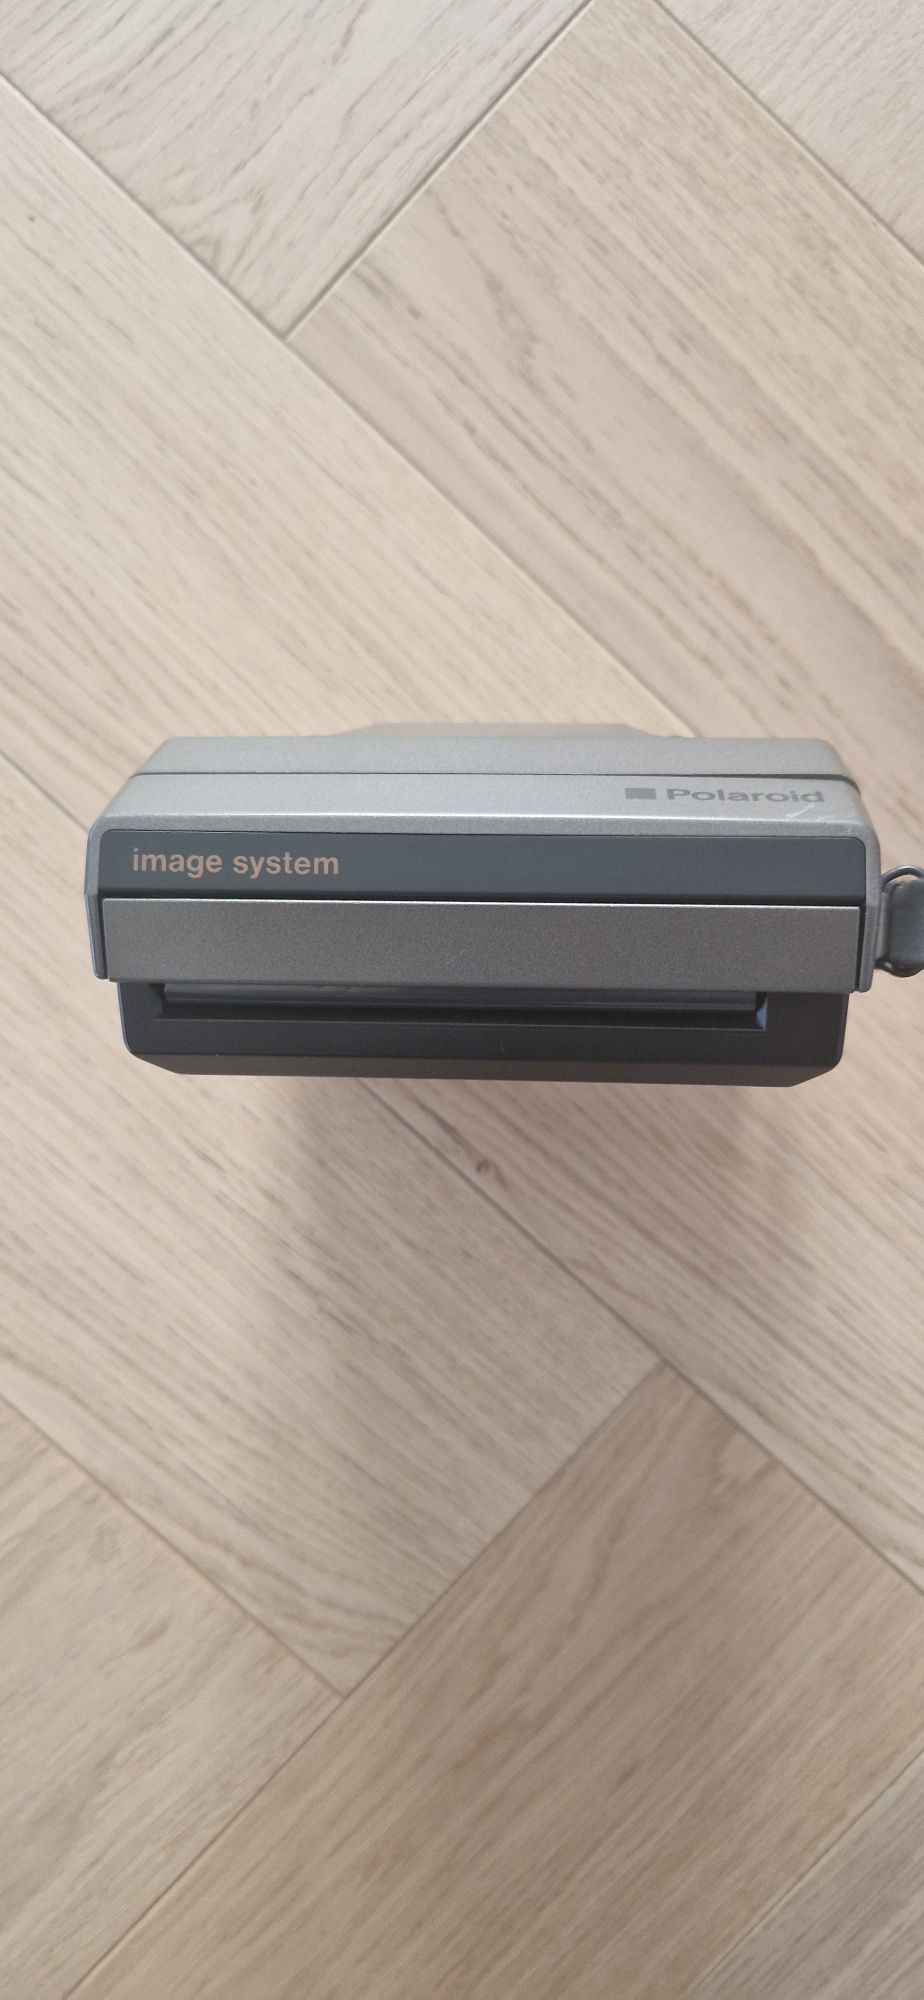 Polaroid image system